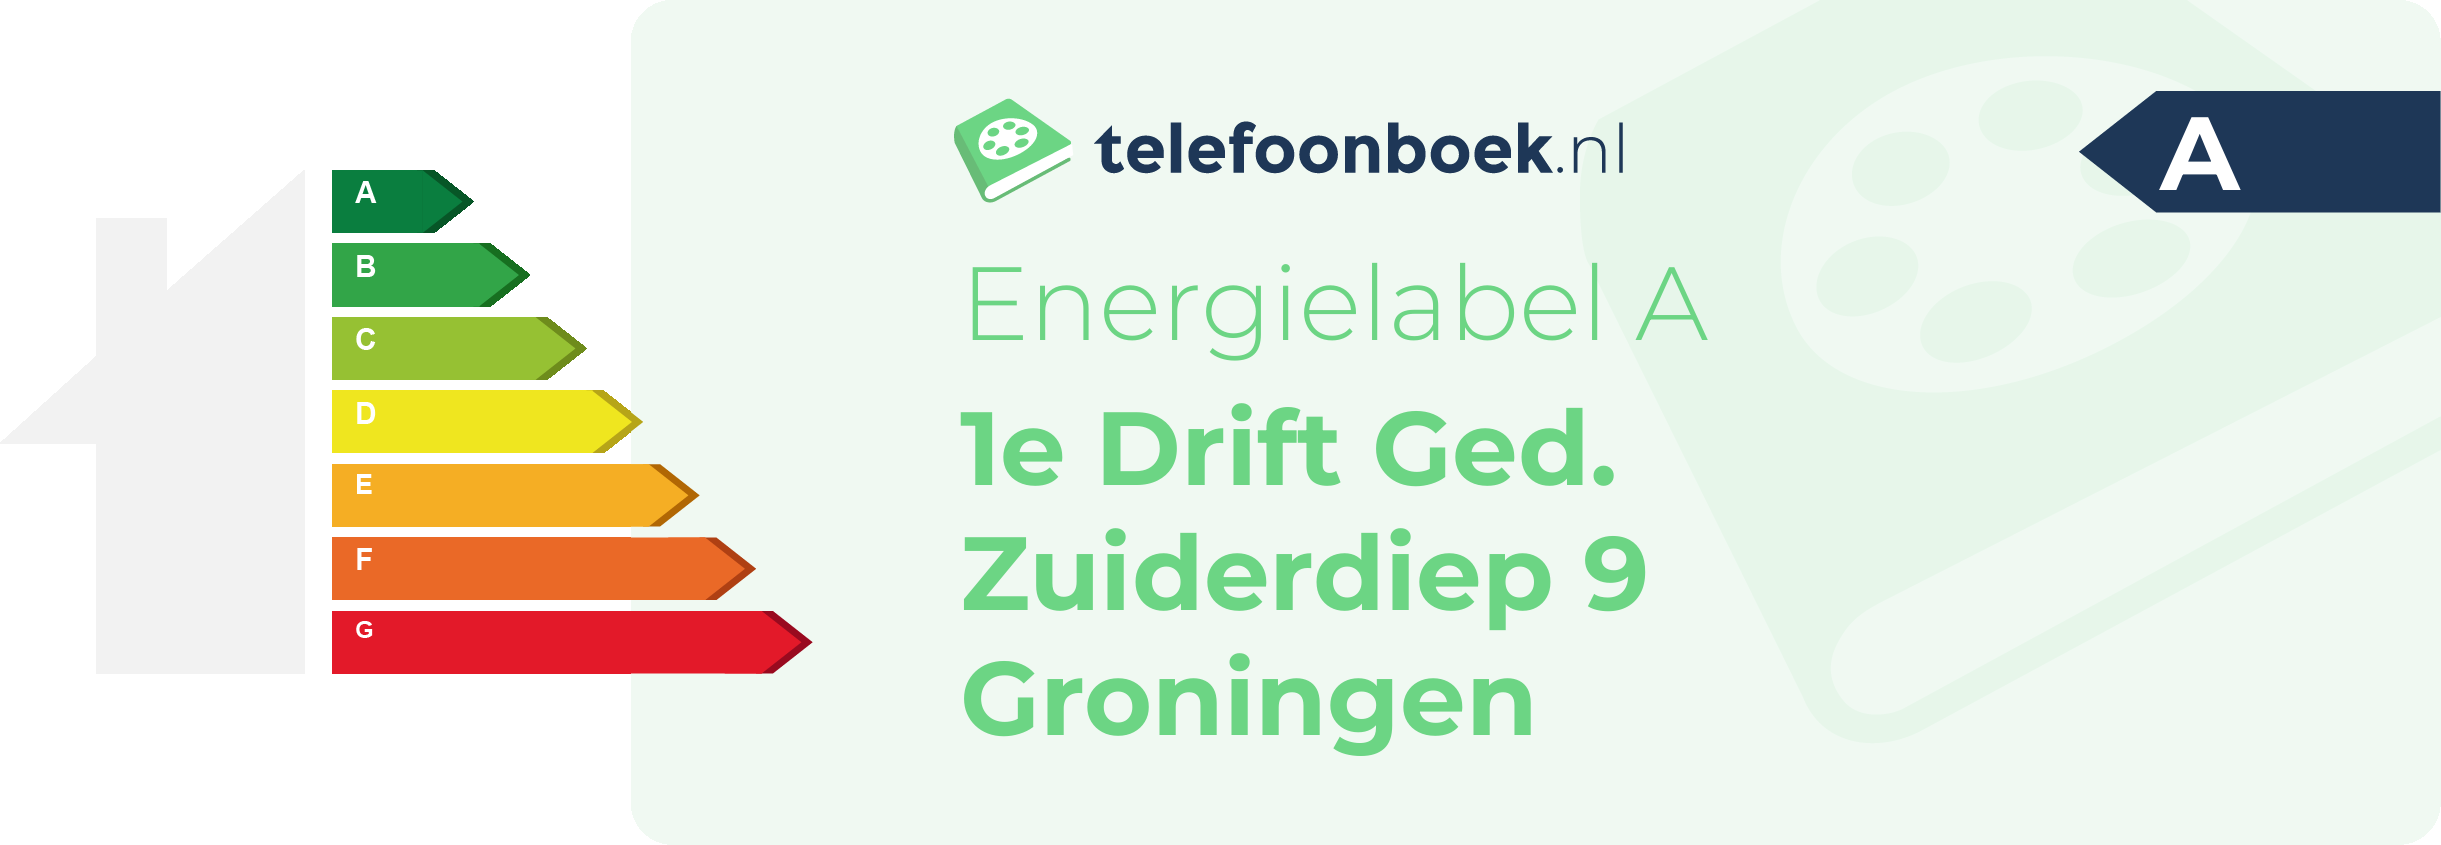 Energielabel 1e Drift Ged. Zuiderdiep 9 Groningen